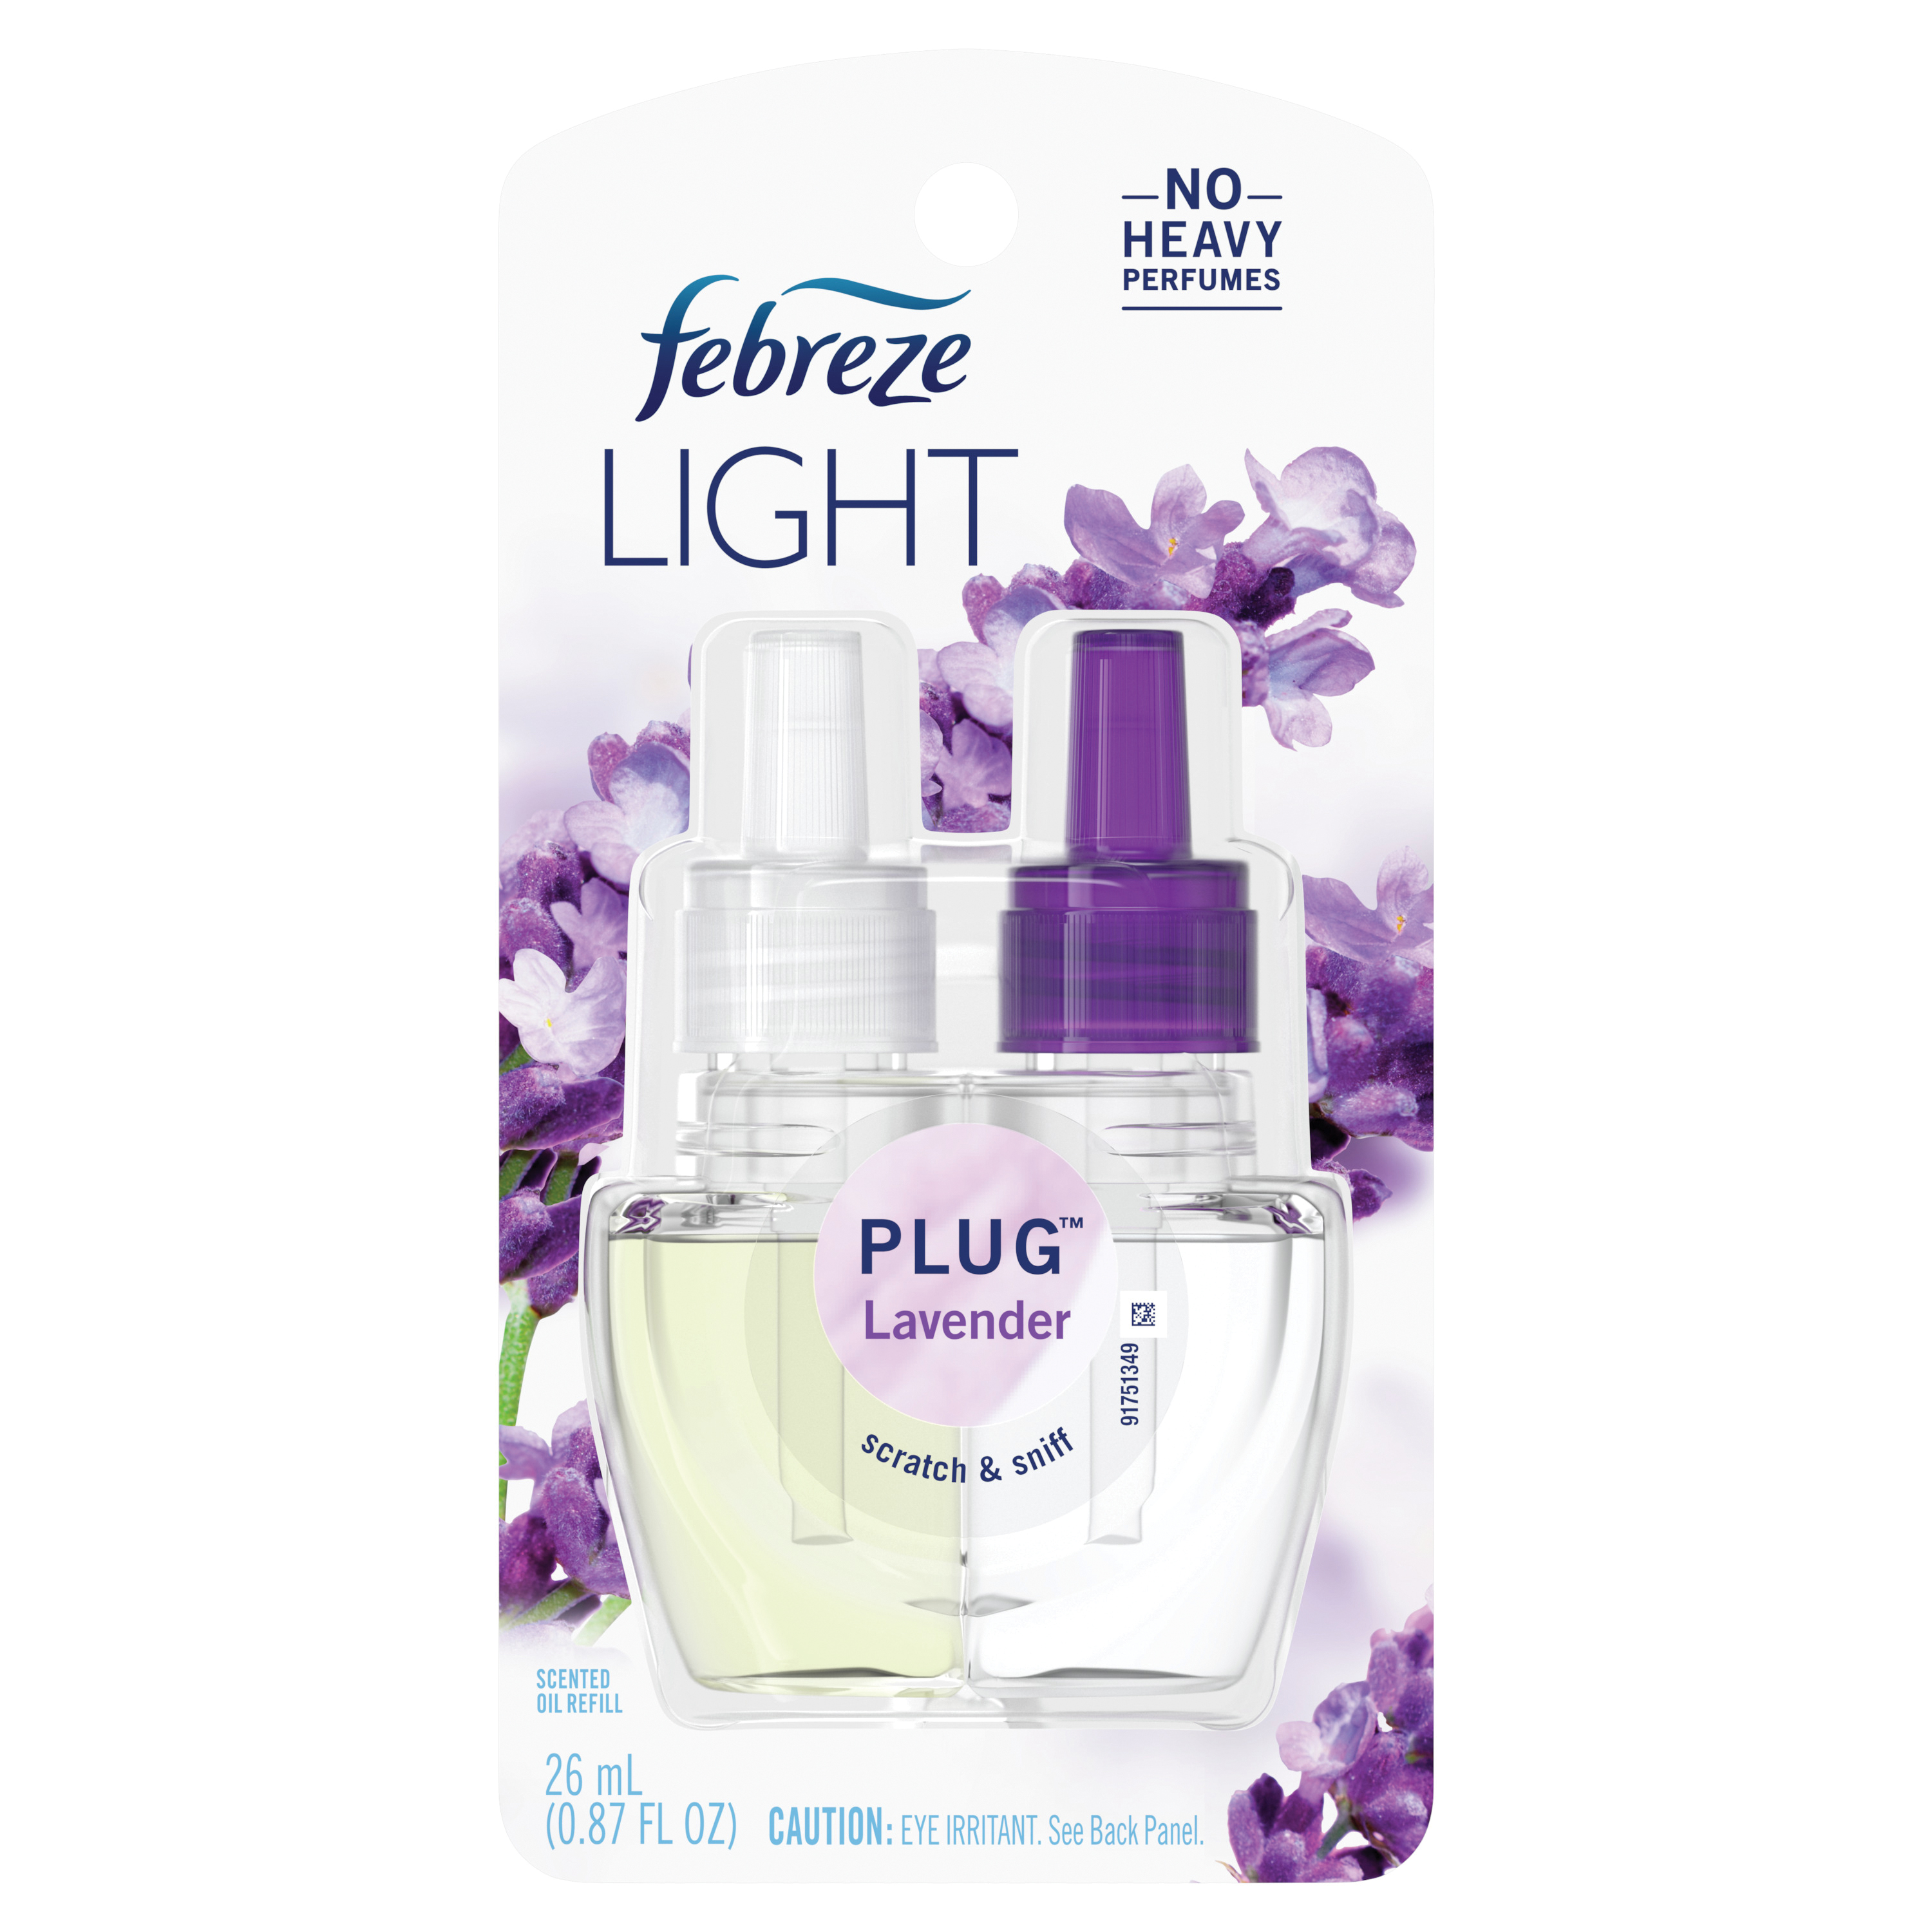 LIGHT PLUG 63063 Air Freshener Refill, 0.87 fl-oz, Lavender, 50 days-Day Freshness